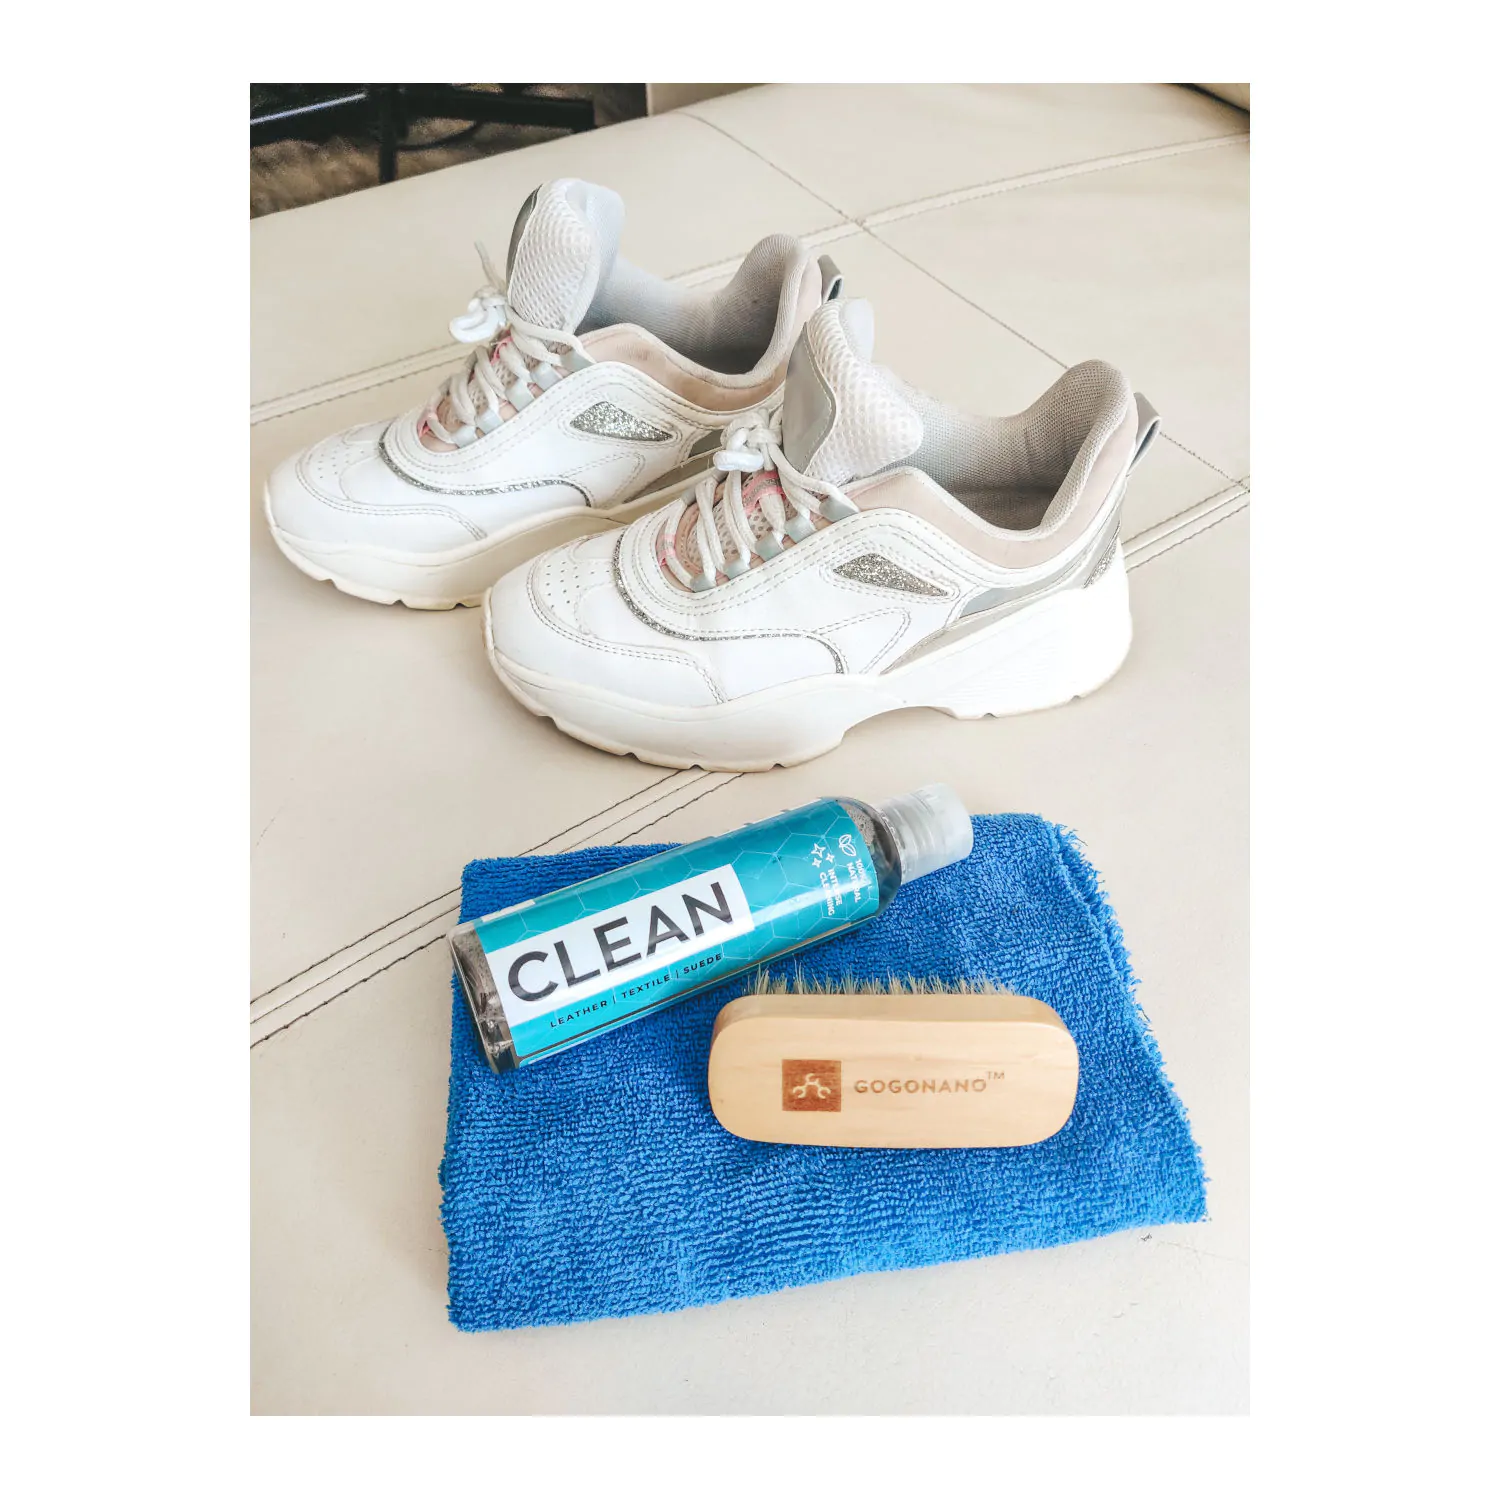 White-shoes-cleaning-with-ecofriendly-gogonano-cleaner-hog-hair-brush